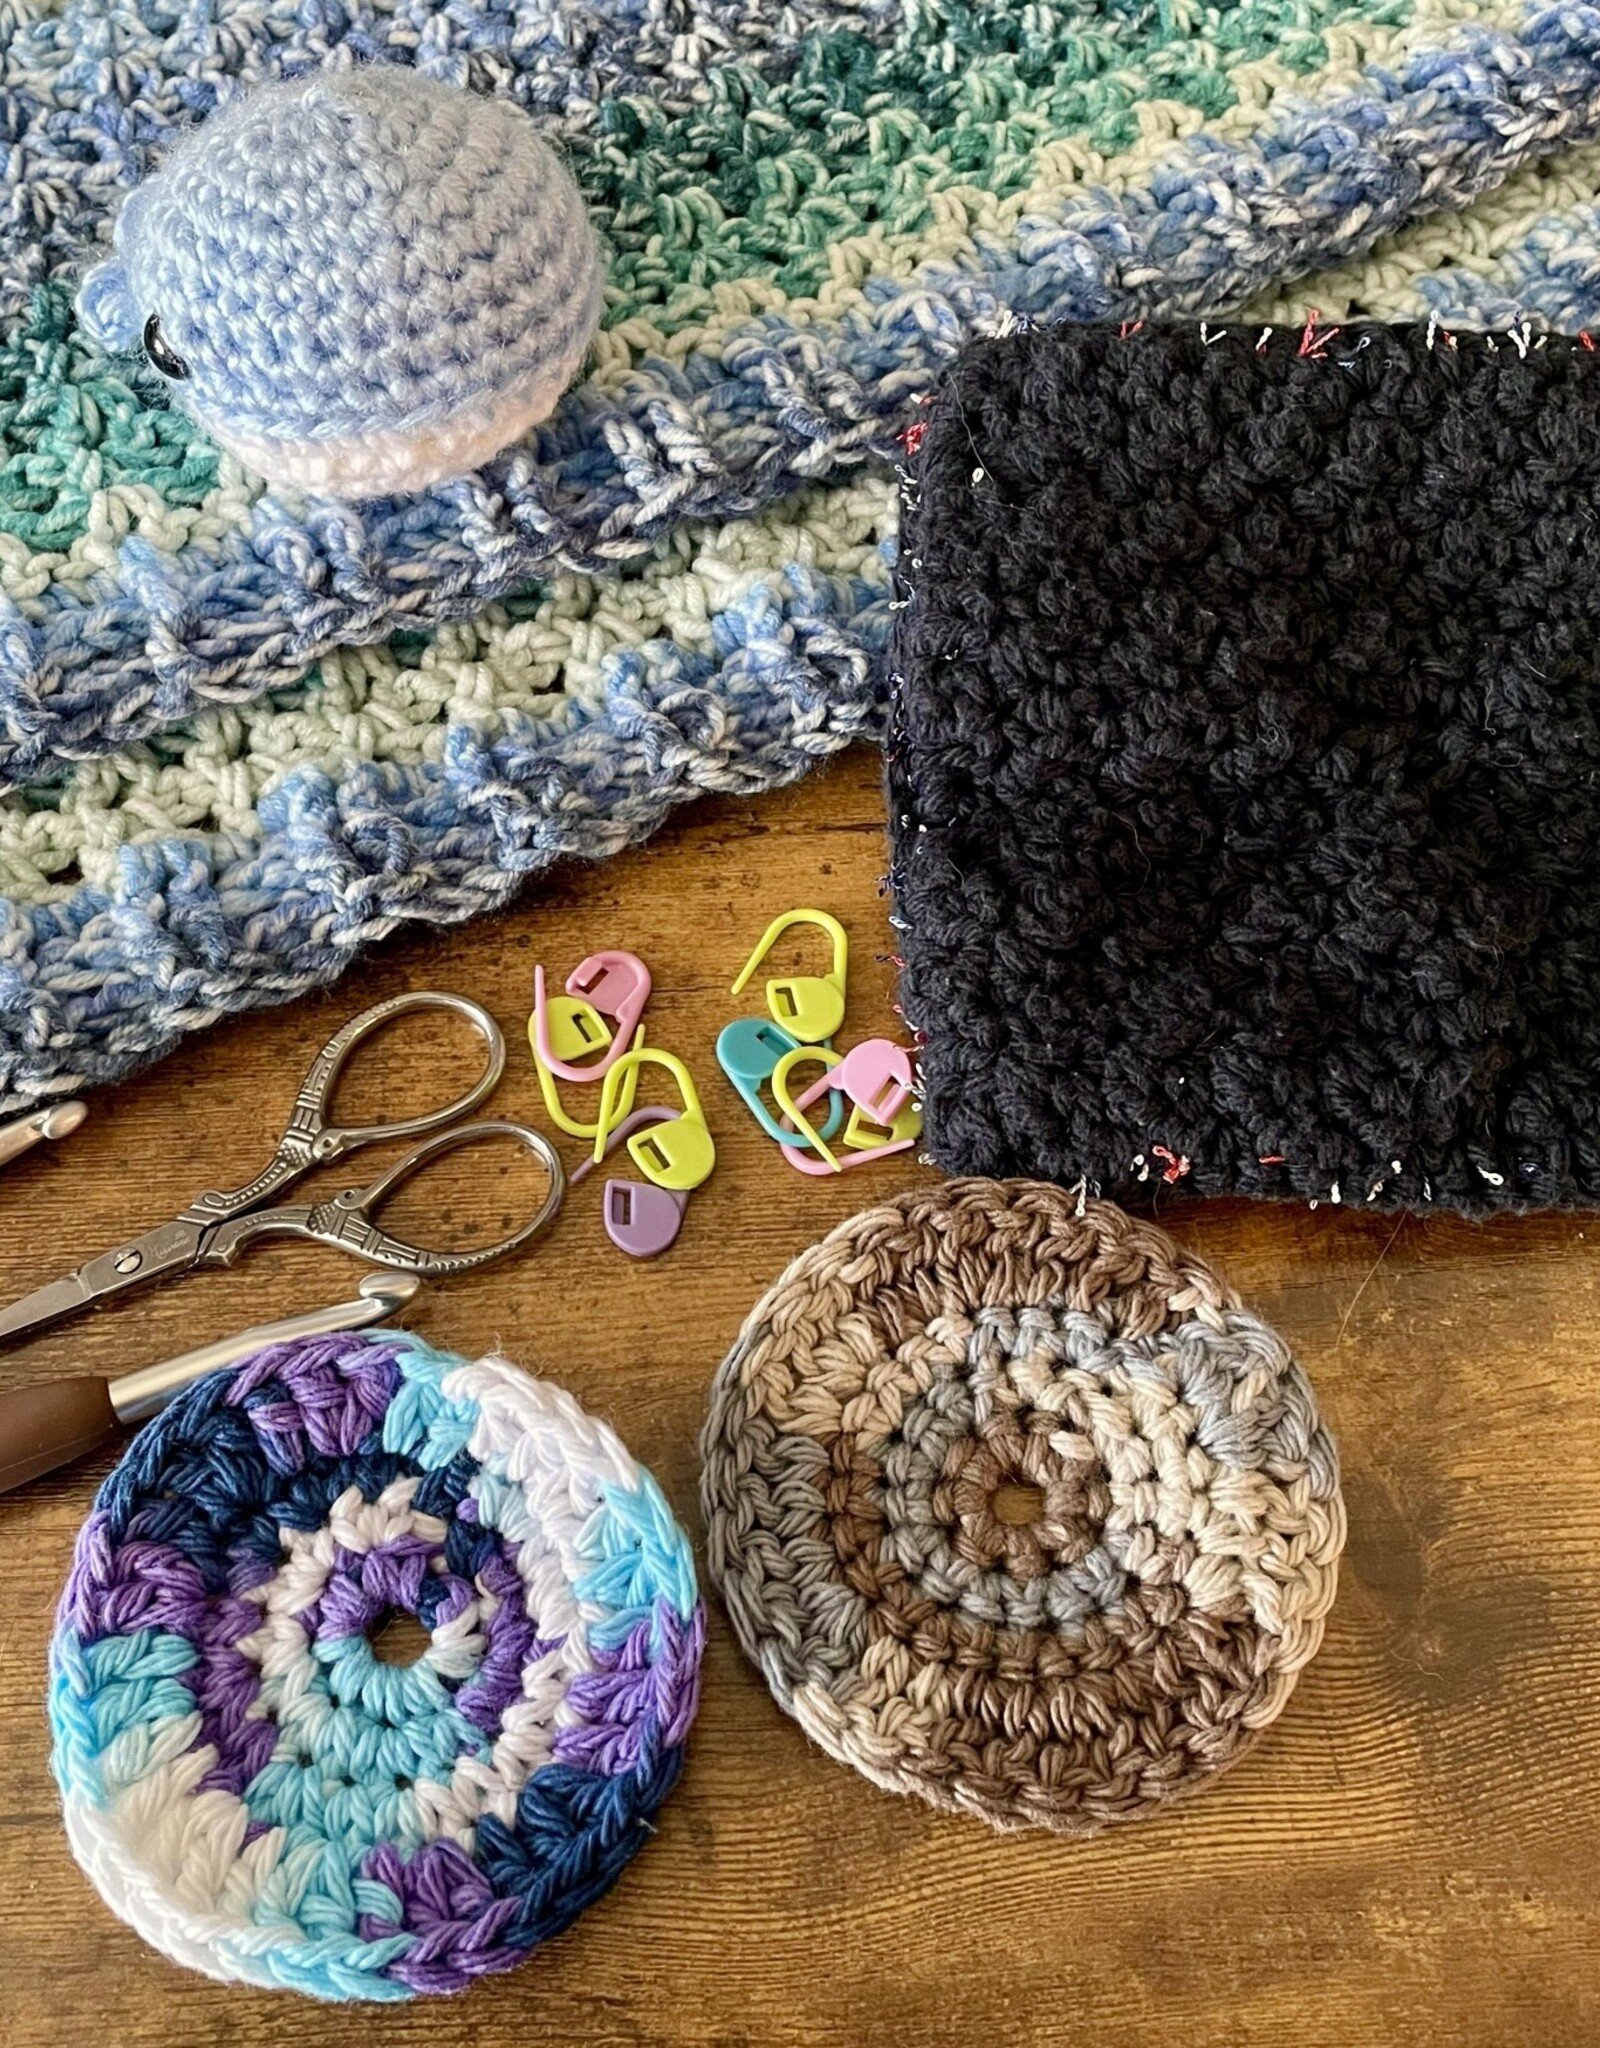 Crochet 101 - Saturdays, June 15 & 22, 10am-12pm